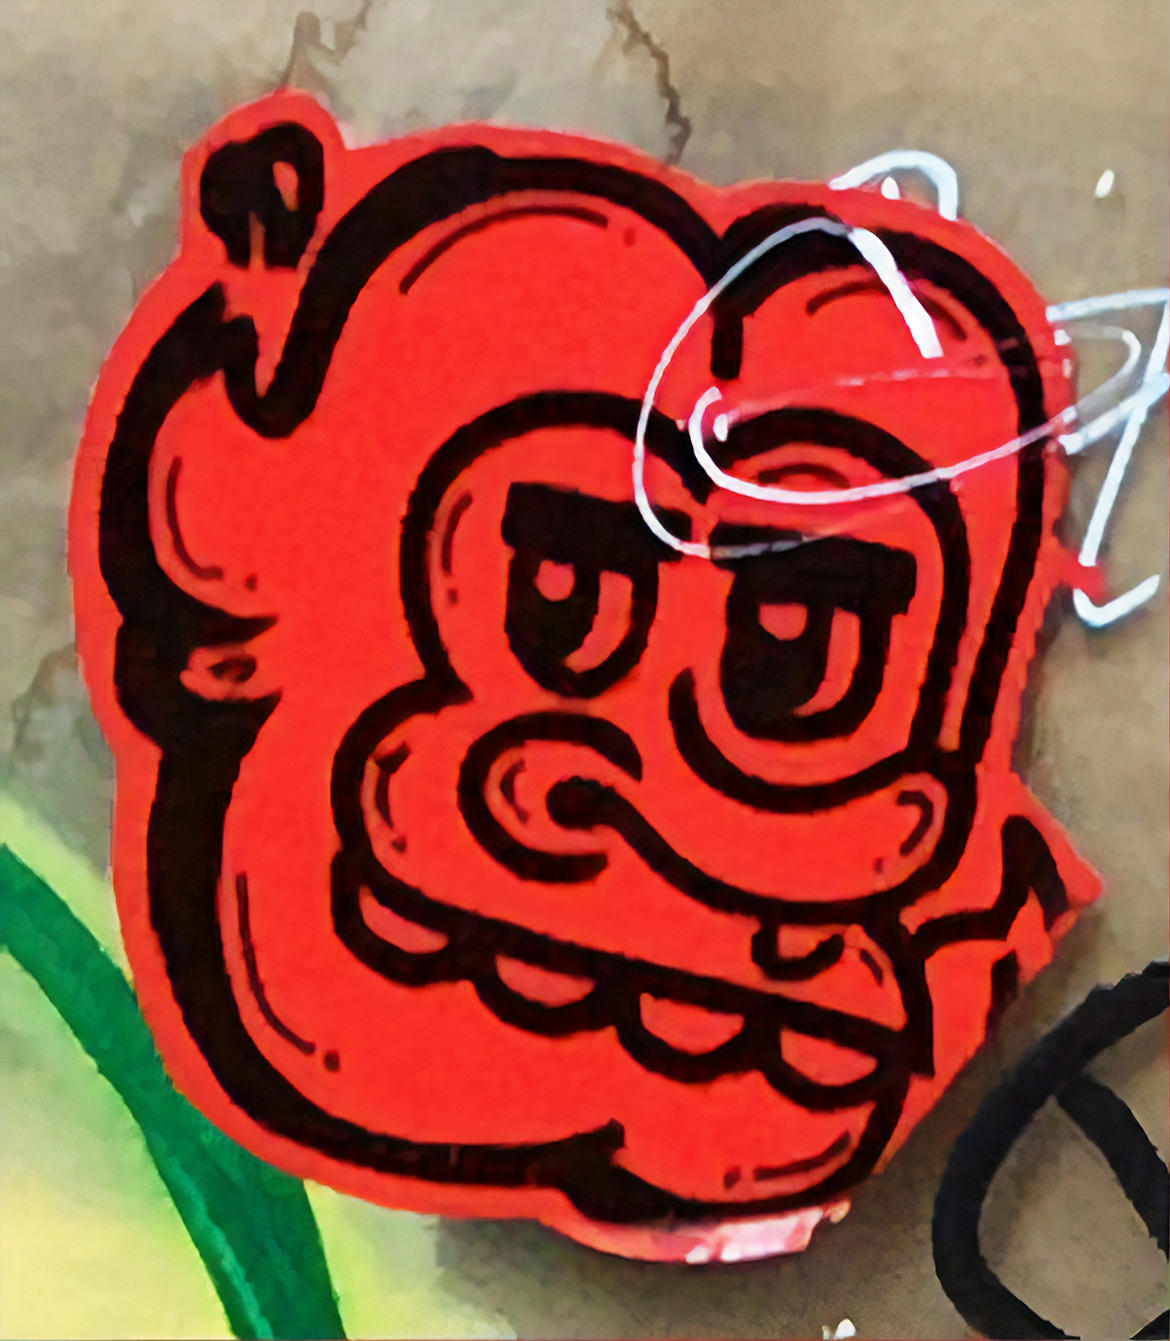 A graffiti sticker of a cartoon face in red and black